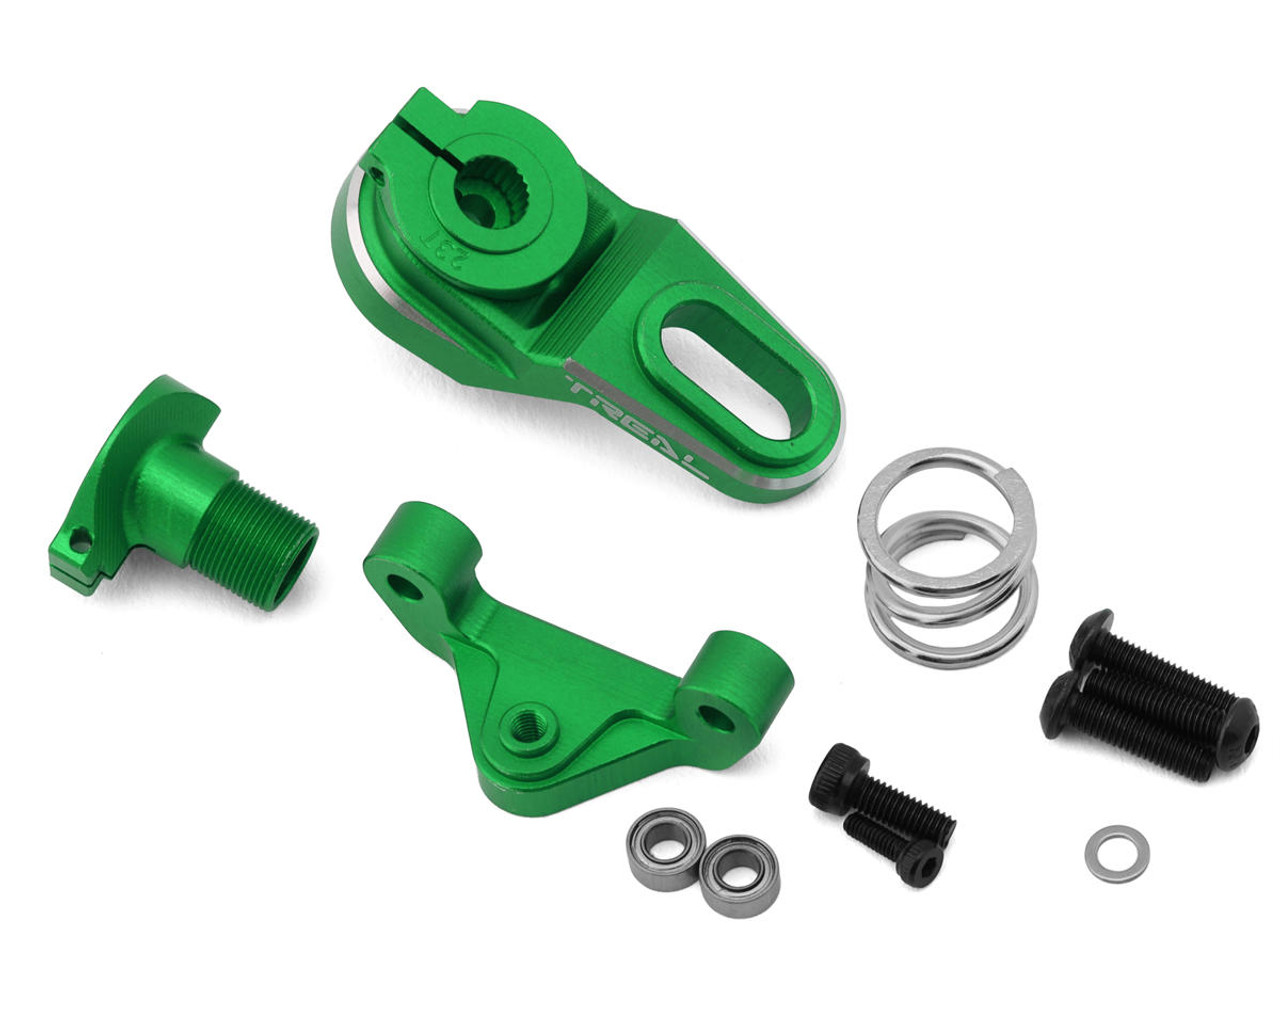 Treal Hobby Losi Promoto MX CNC Aluminum Servo Saver w/Spring (25T/23T) (Green)